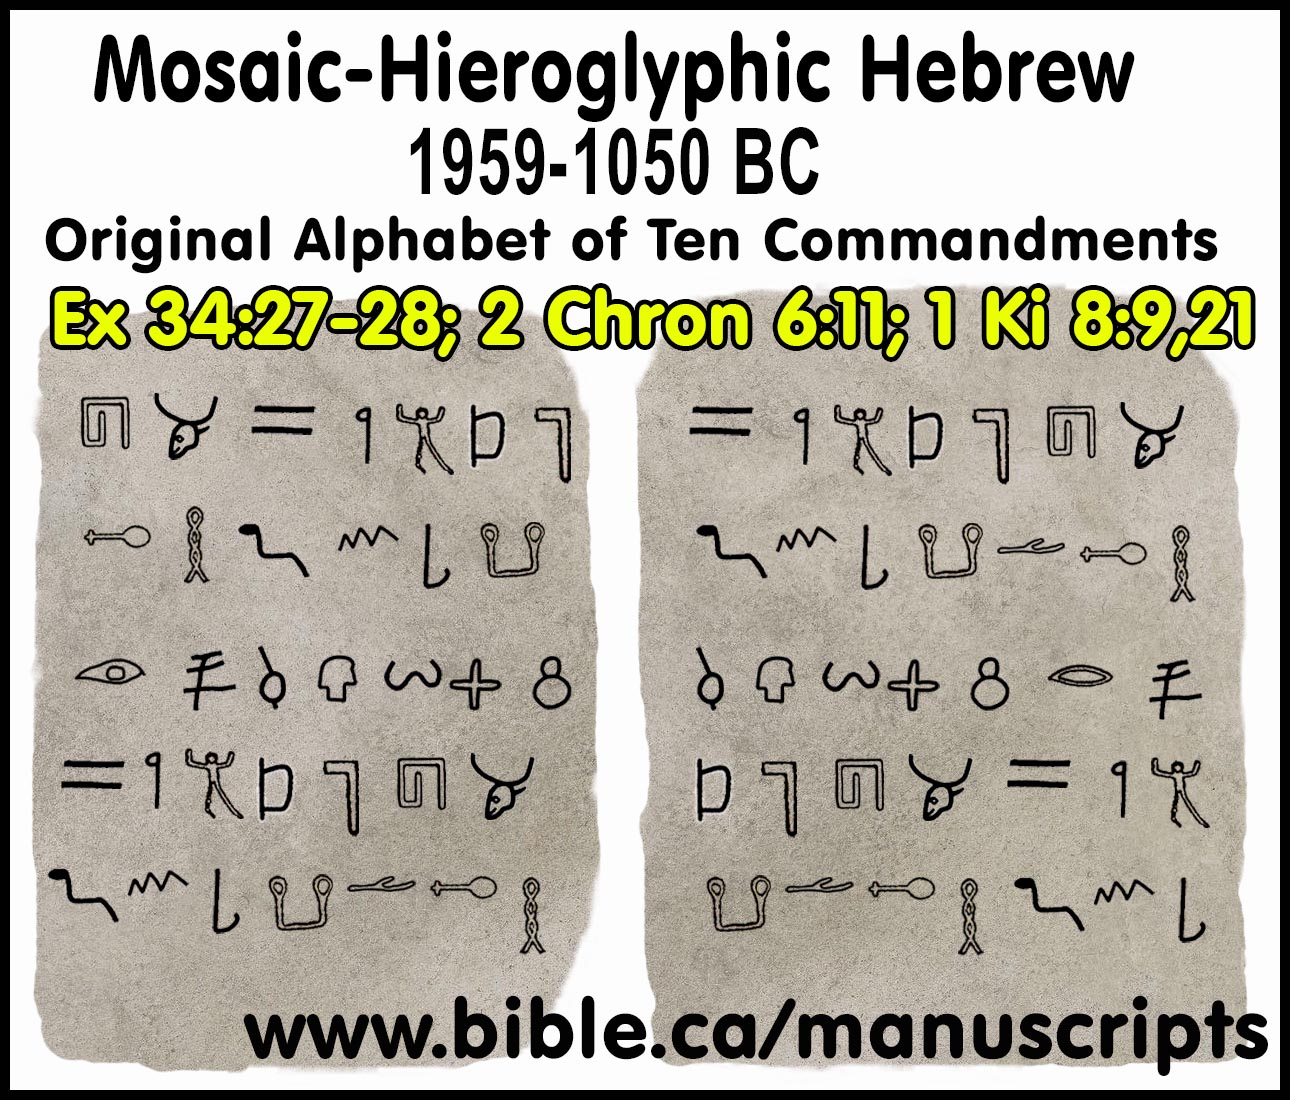 1313f hieroglyph codepoints